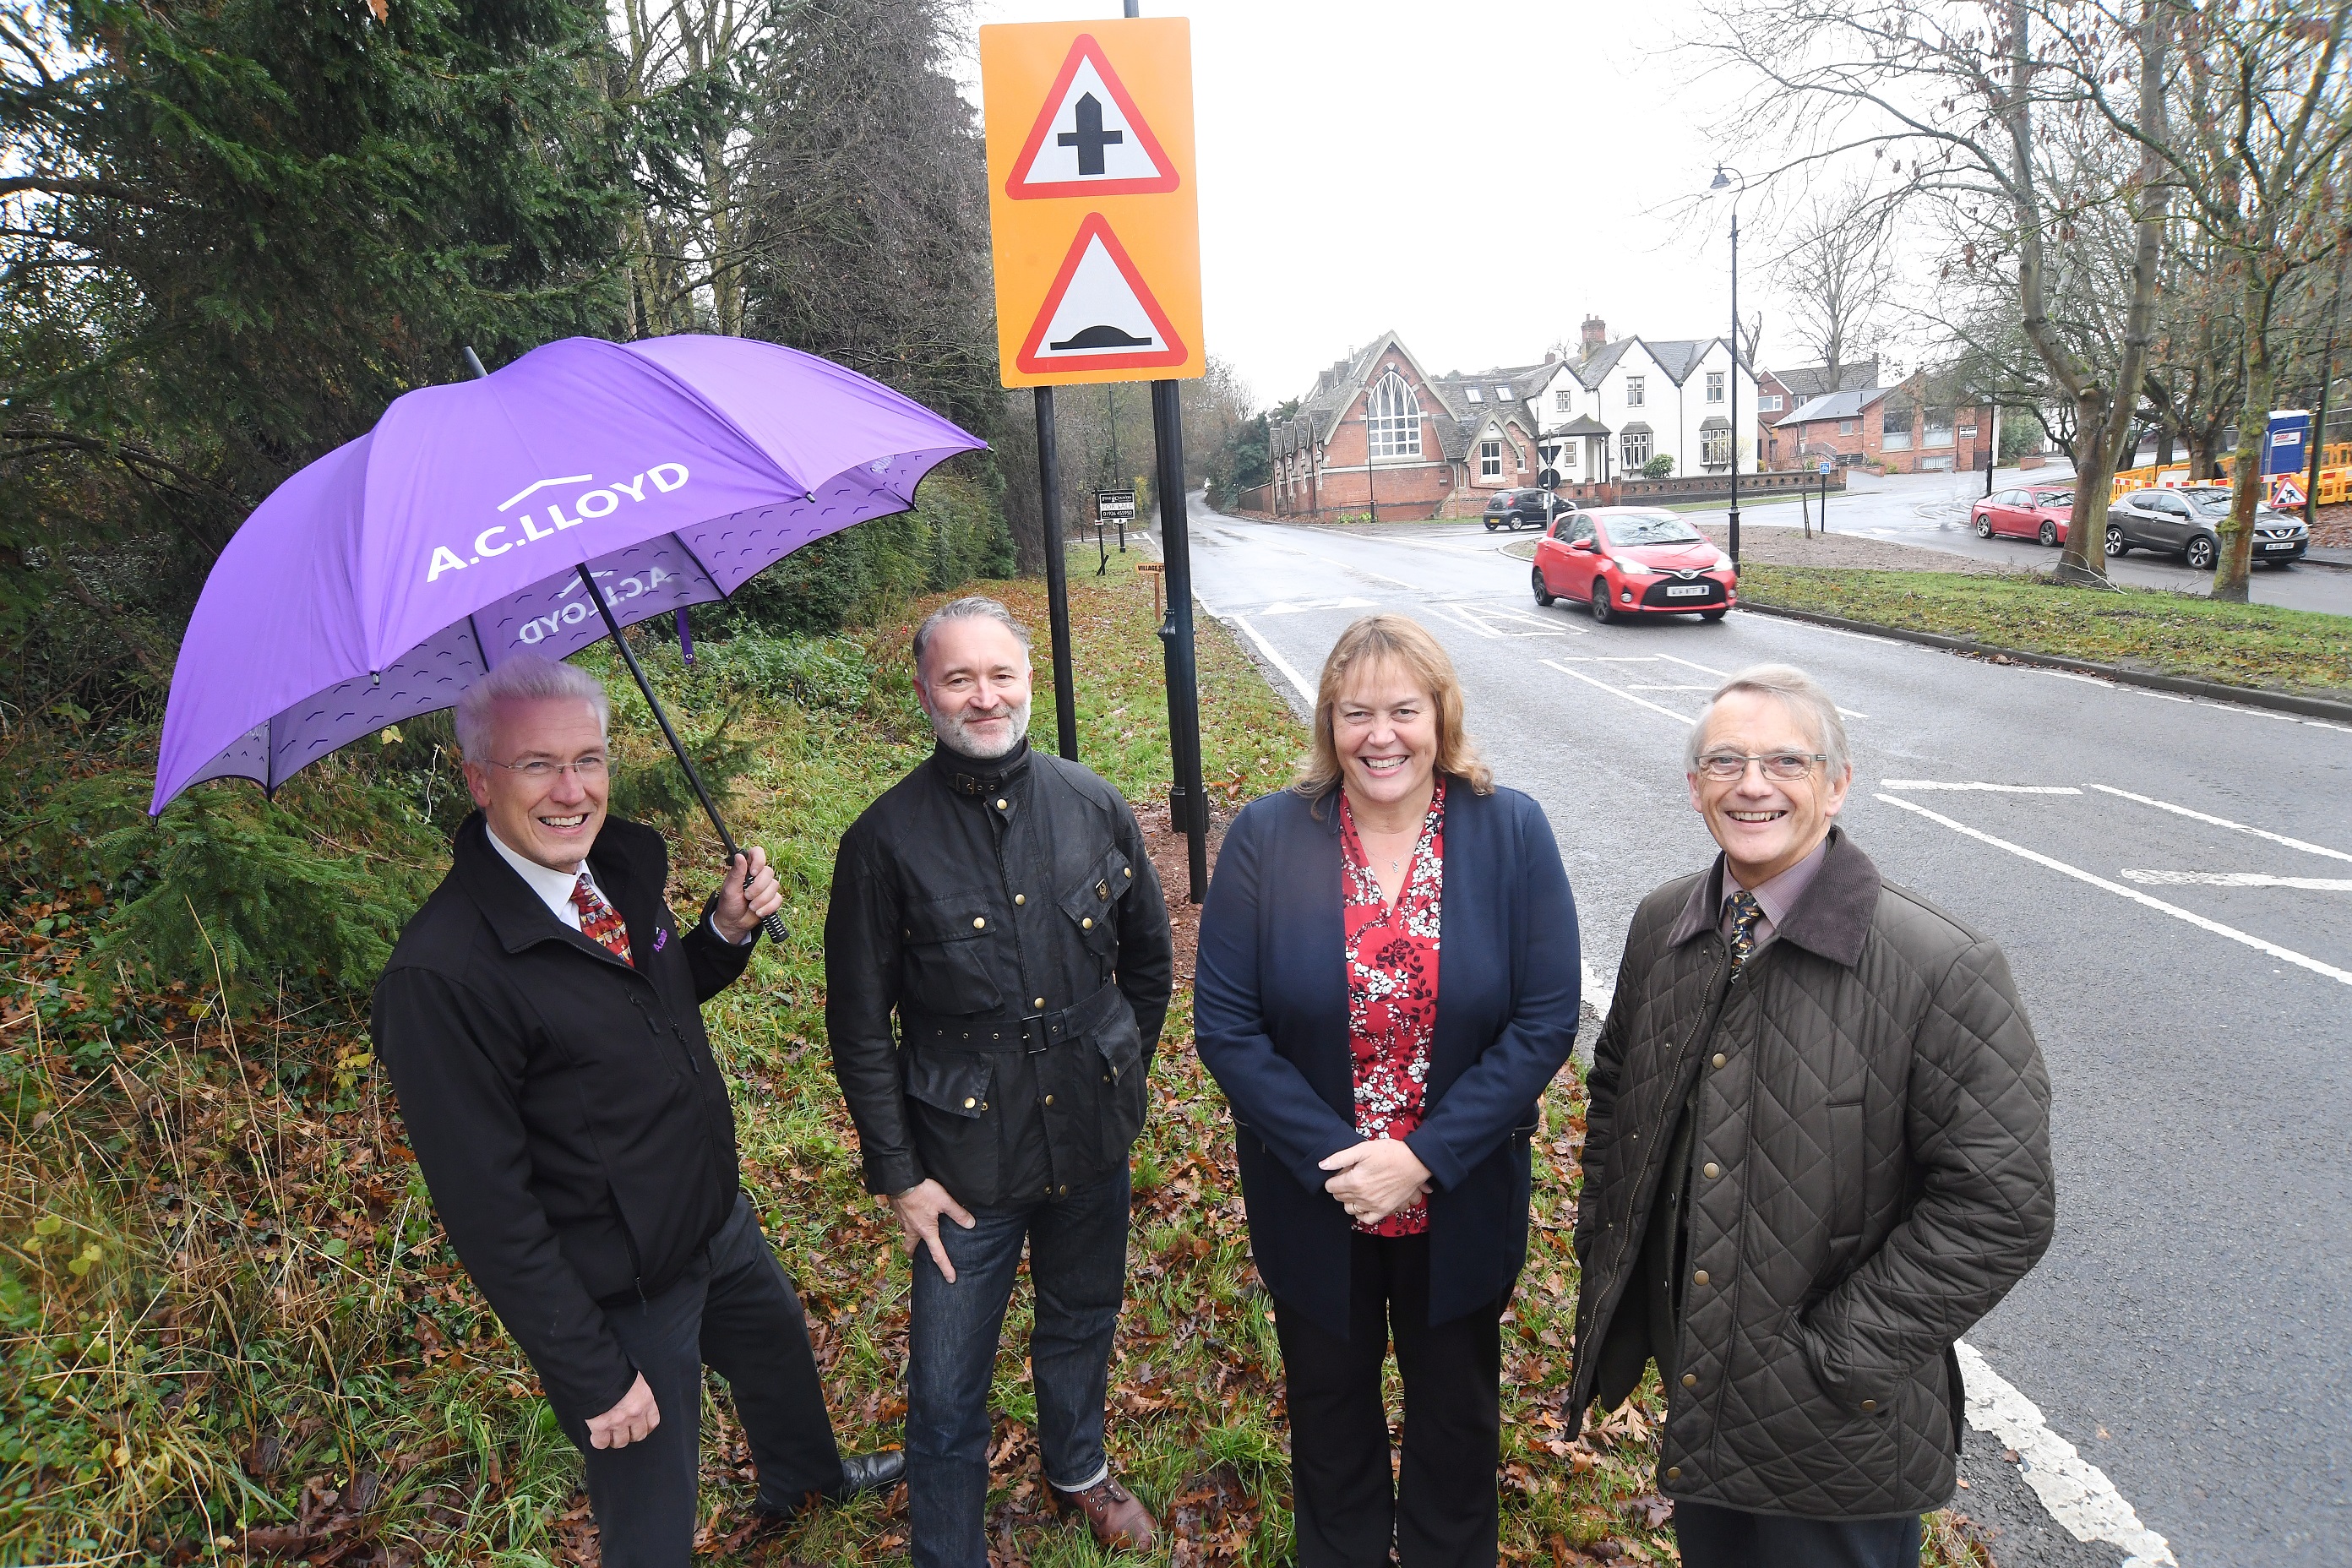 Organisations work together to introduce traffic calming scheme in a Warwickshire village